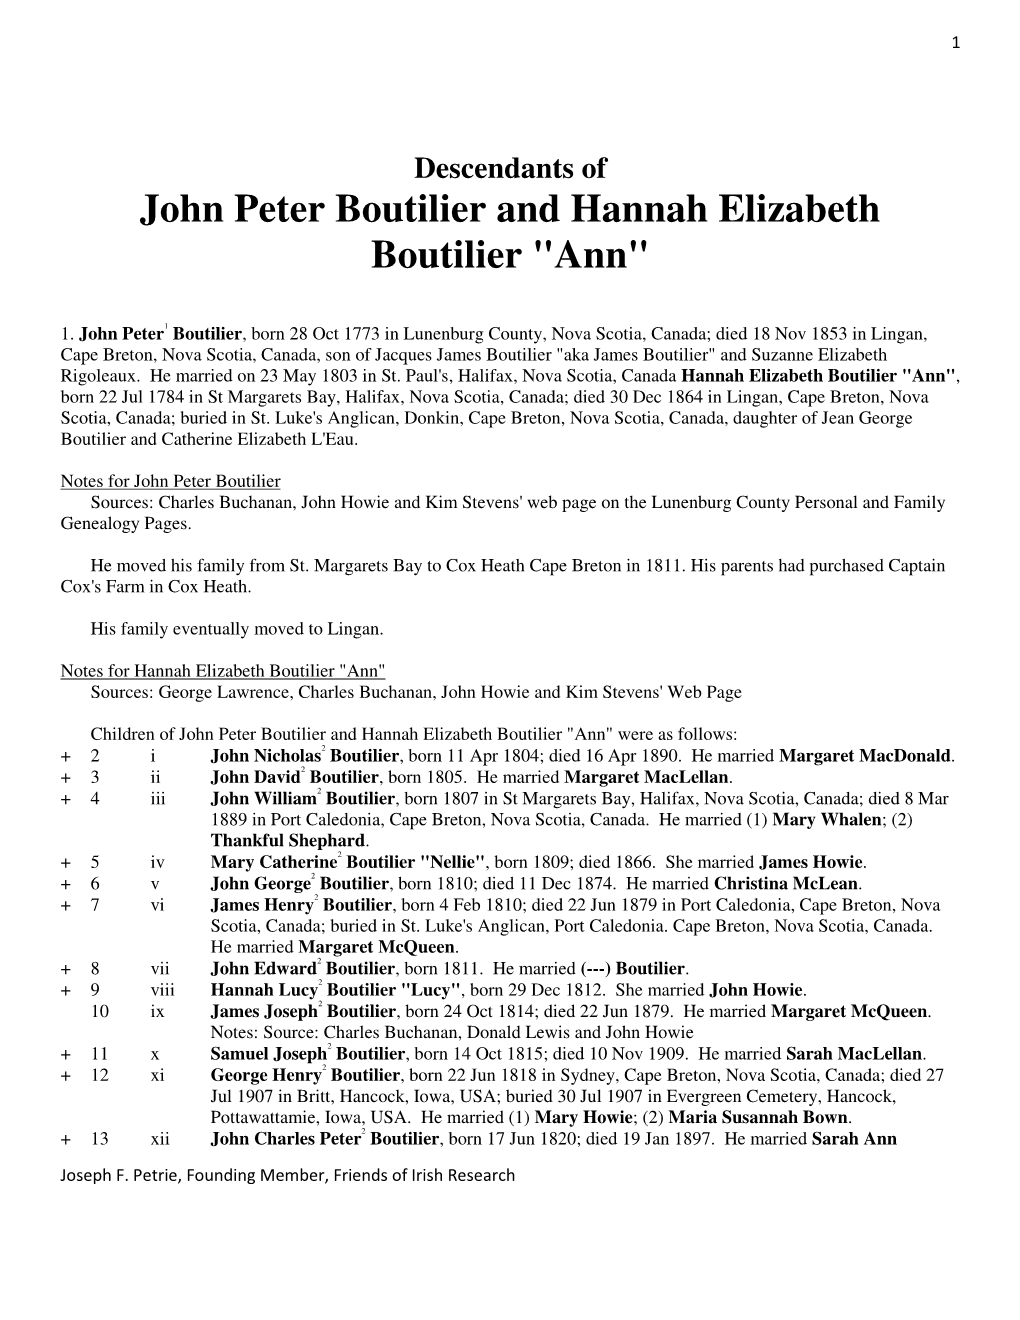 Boutilier and Hannah Elizabeth Boutilier "Ann"